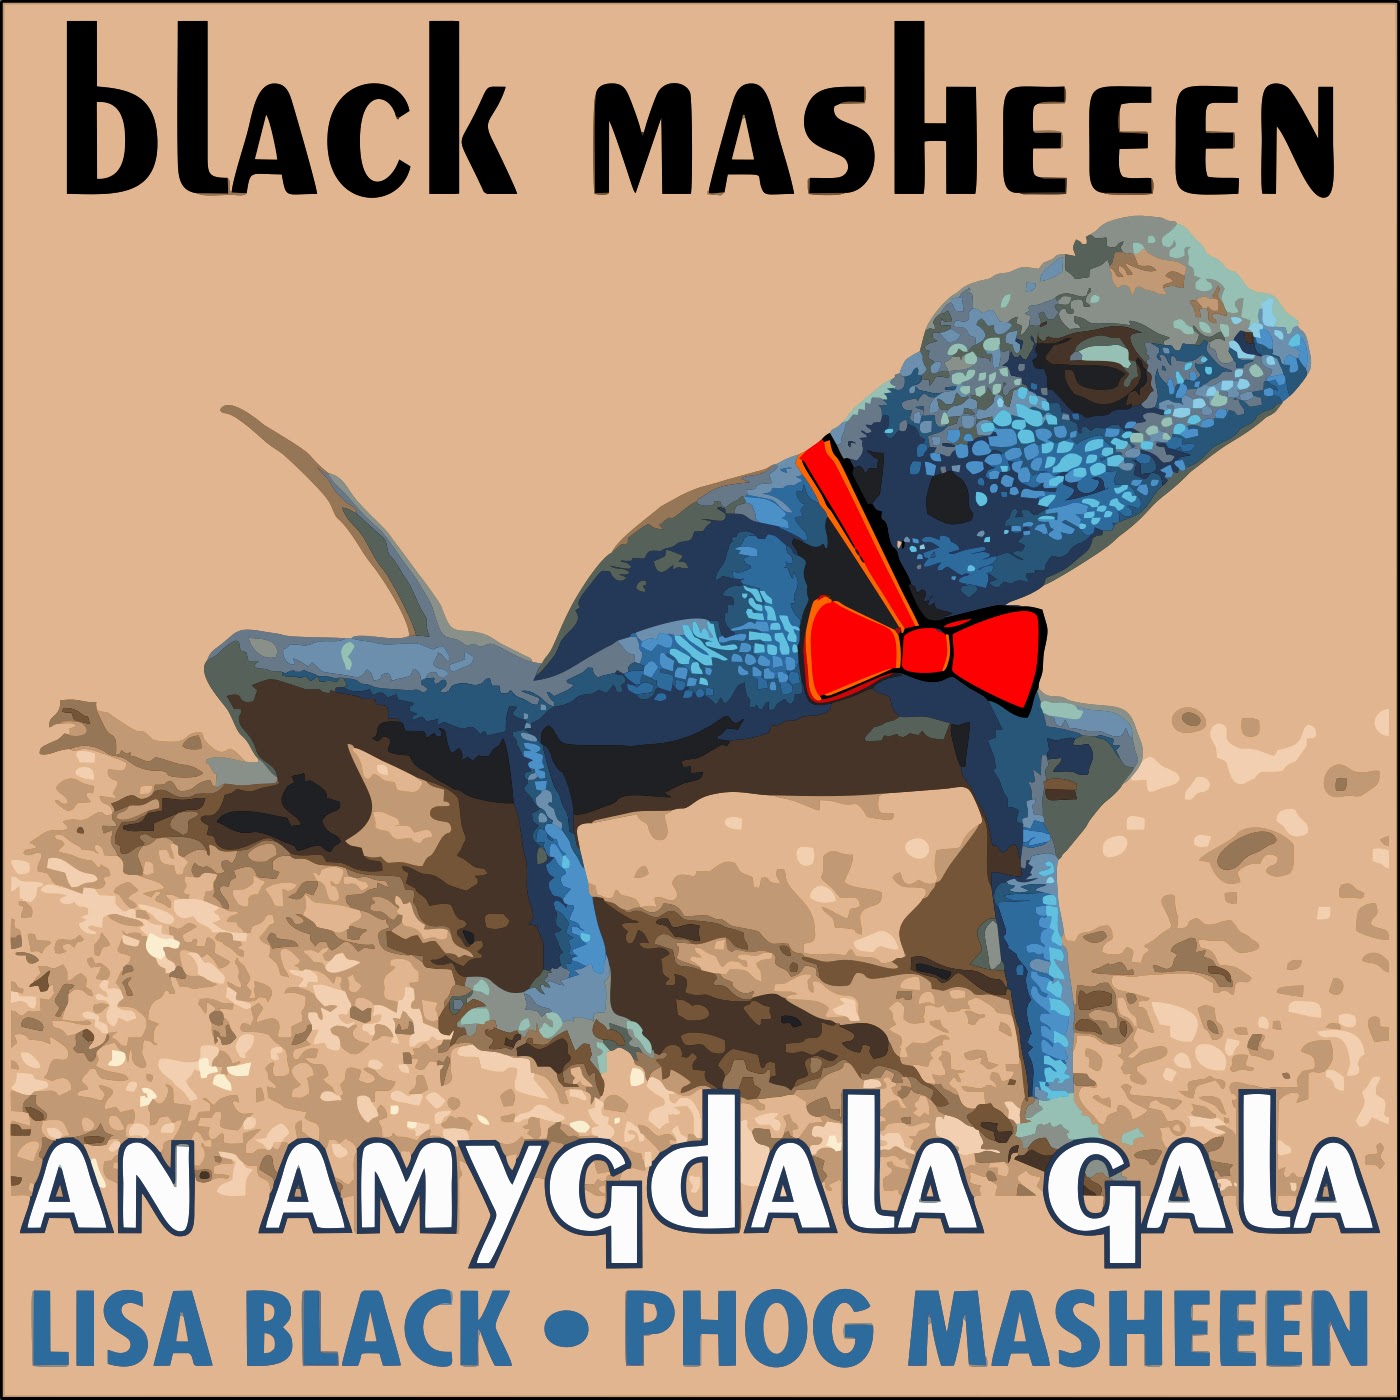 Black Masheeen: An Amygdala Gala